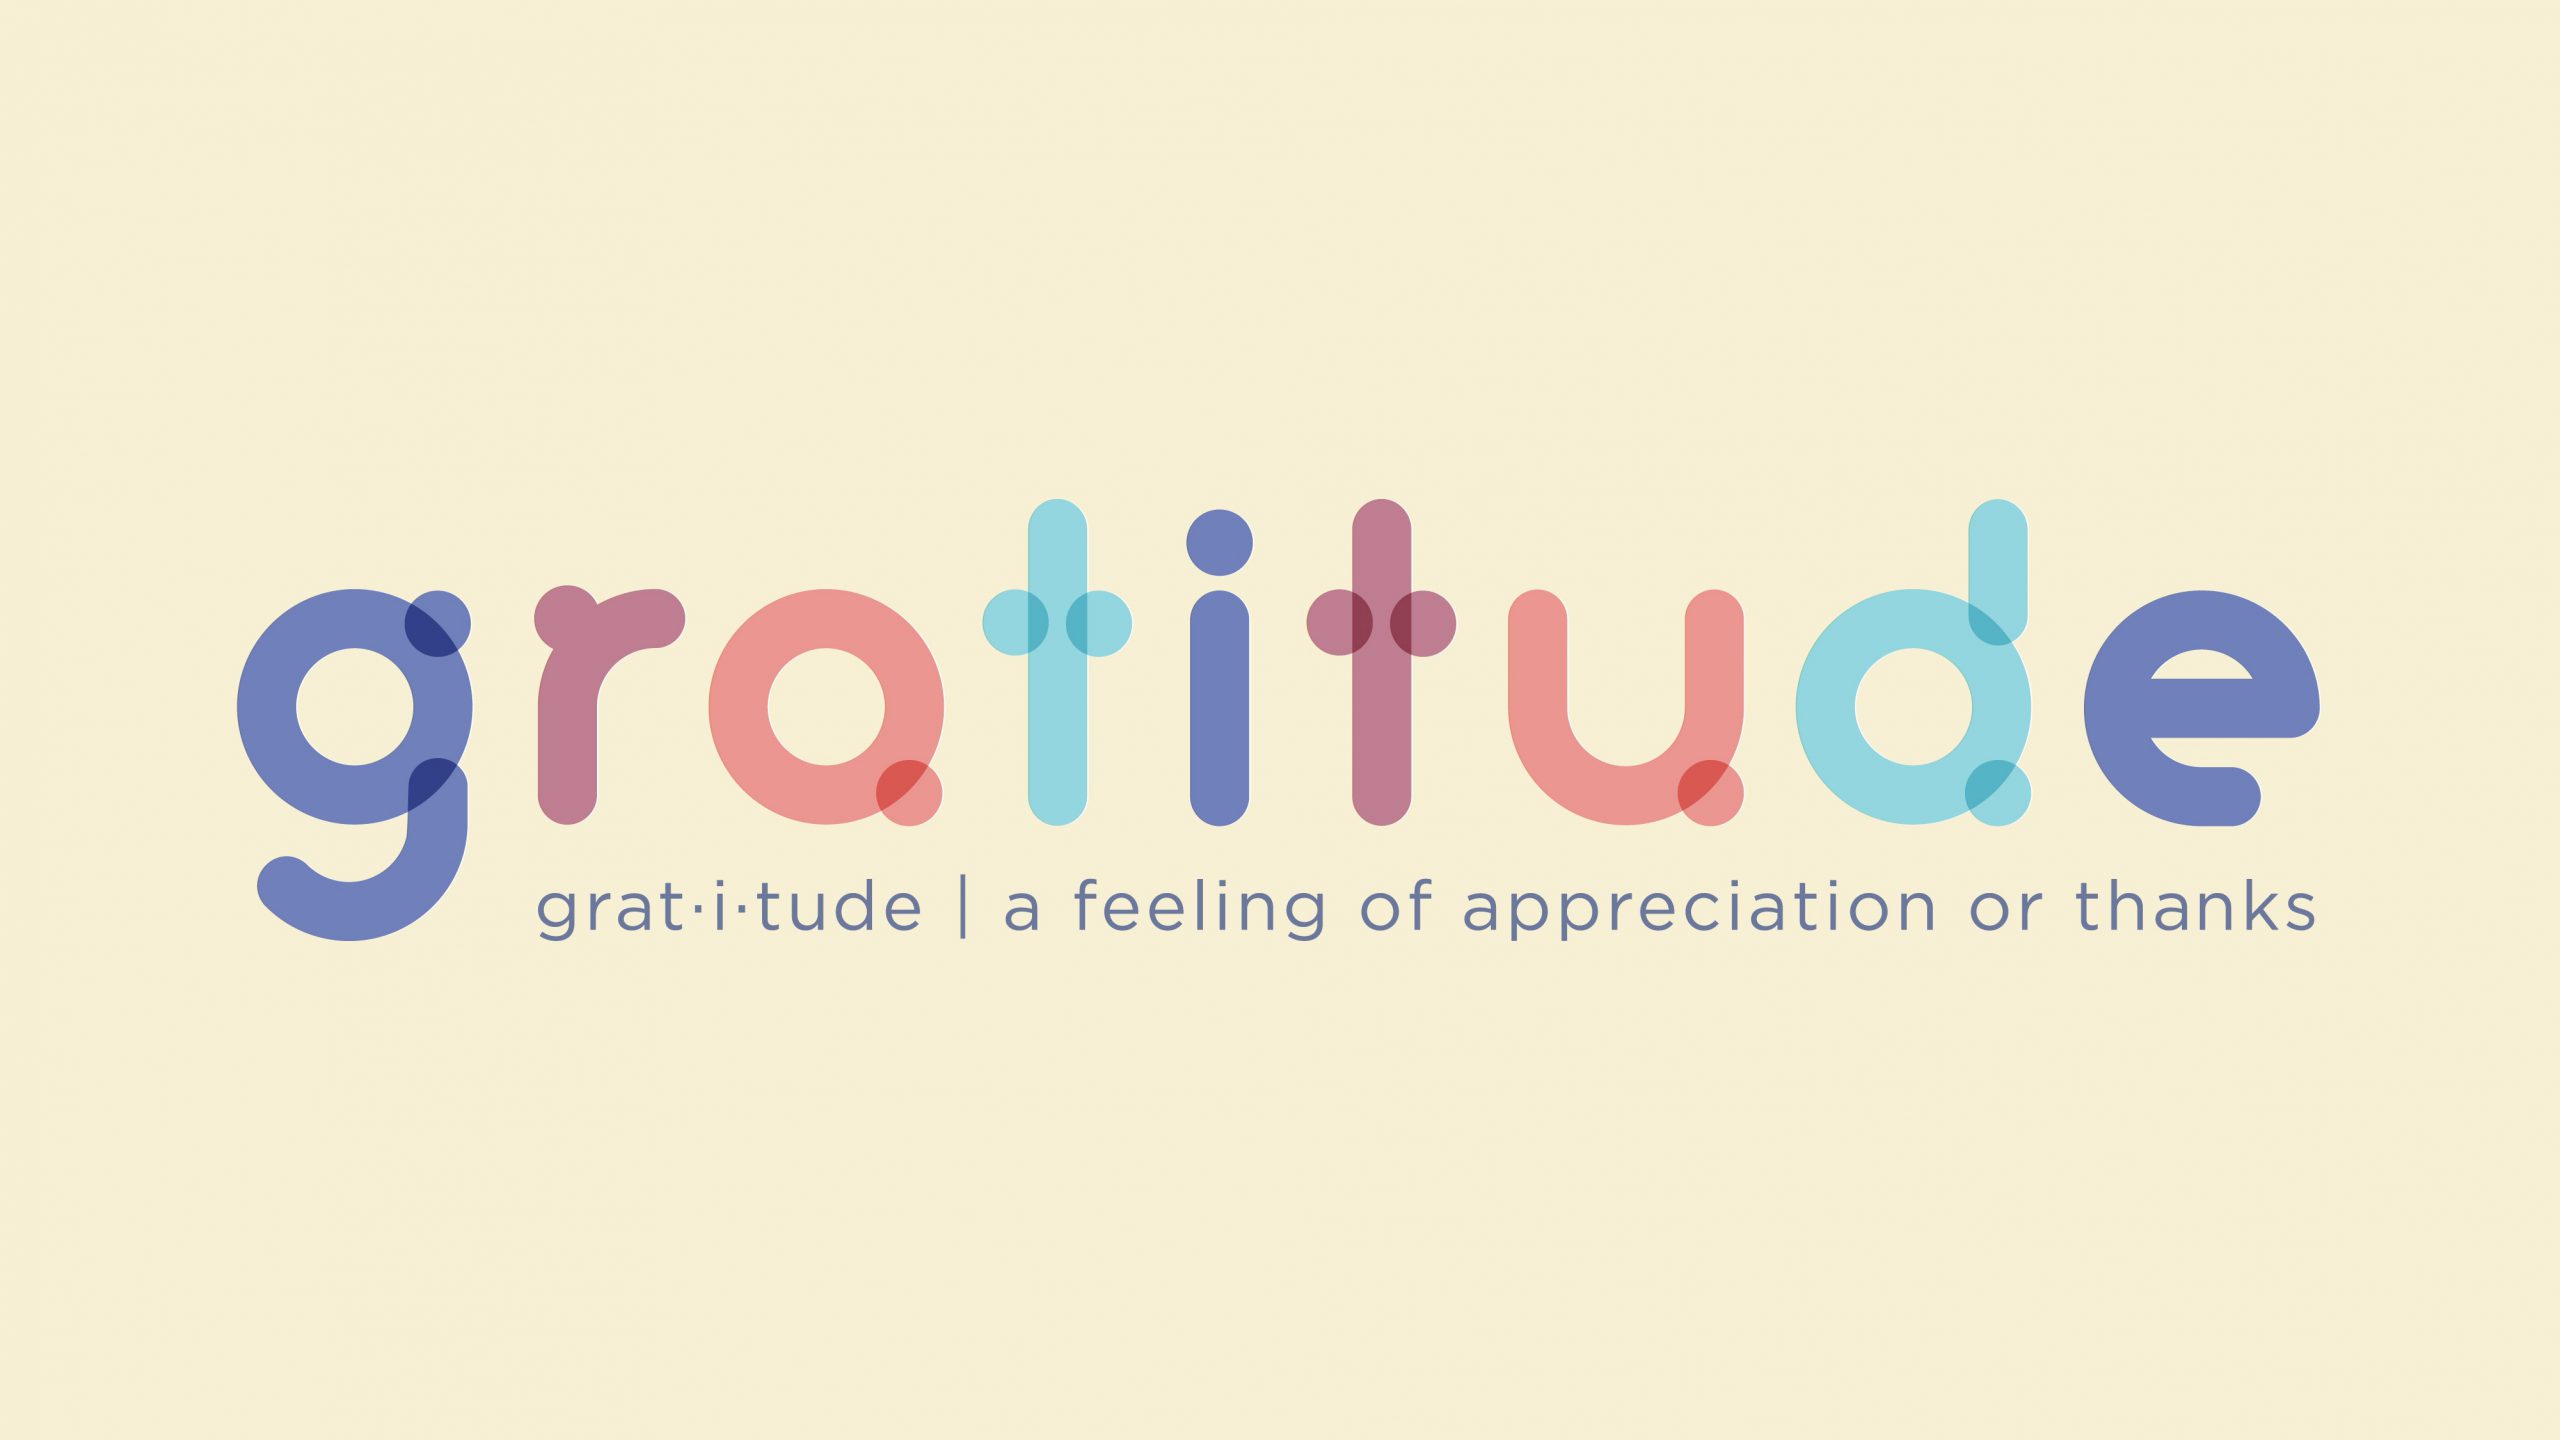 Finding gratitude